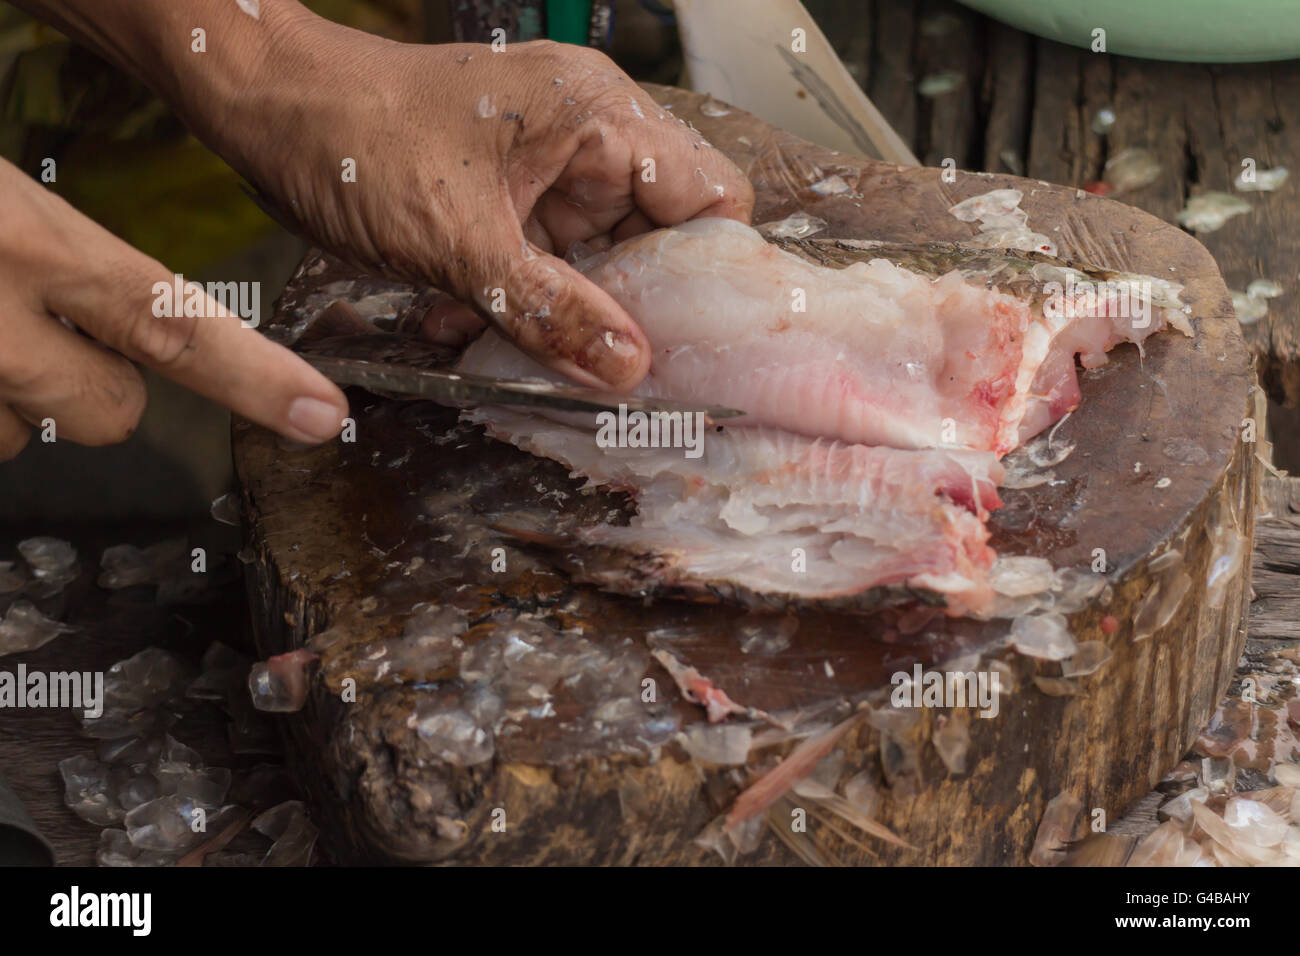 hands cutting a fresh fish on a cutting board Stock Photo